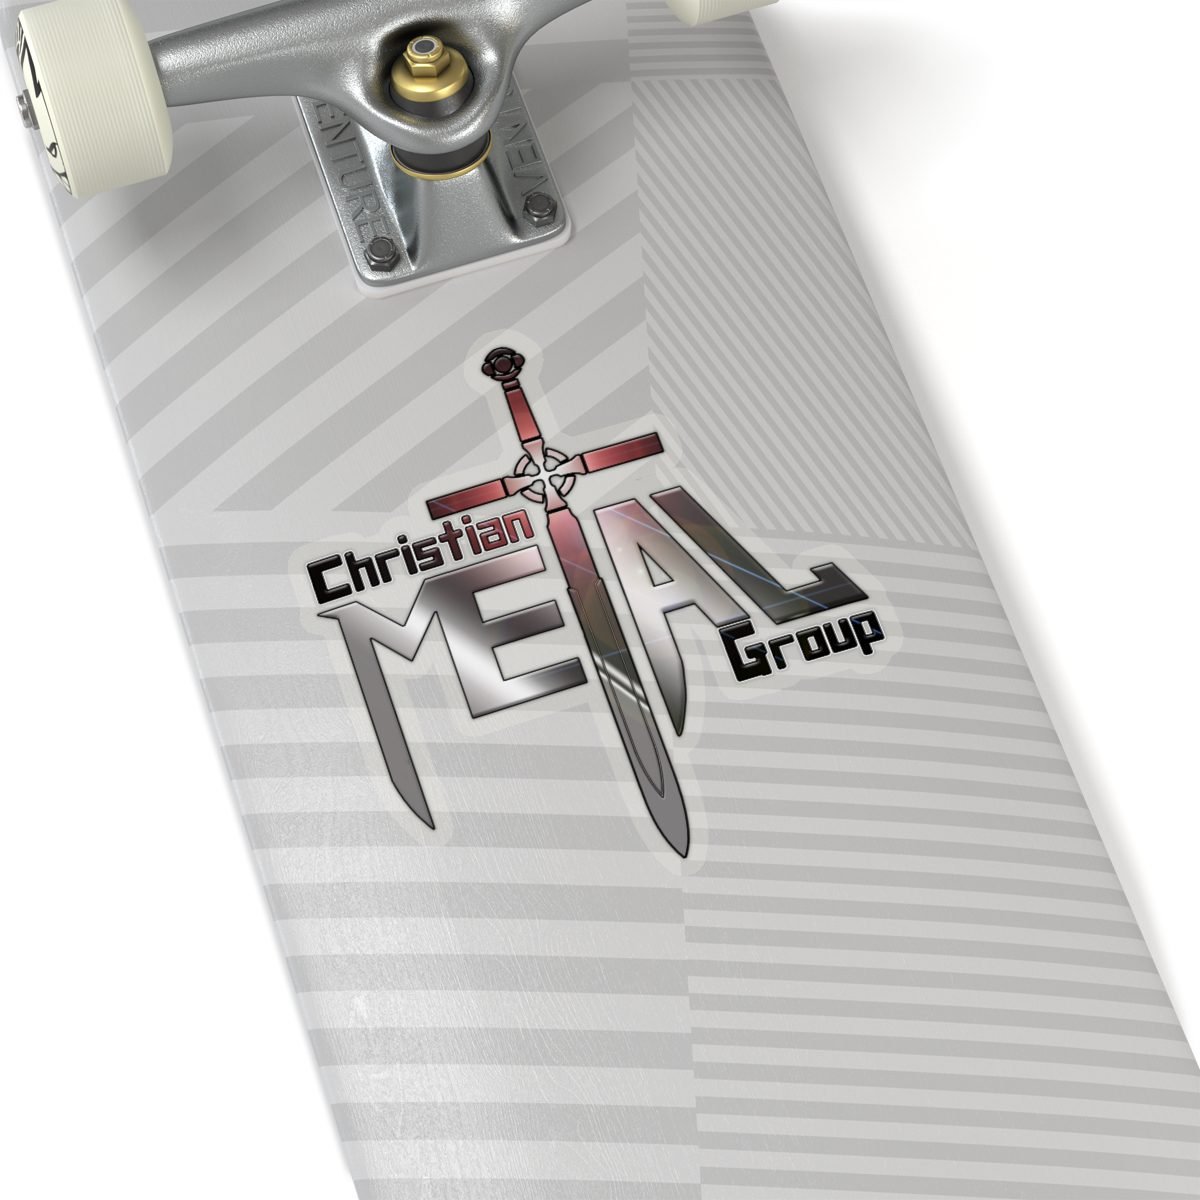 Christian Metal Group Logo Die Cut Stickers